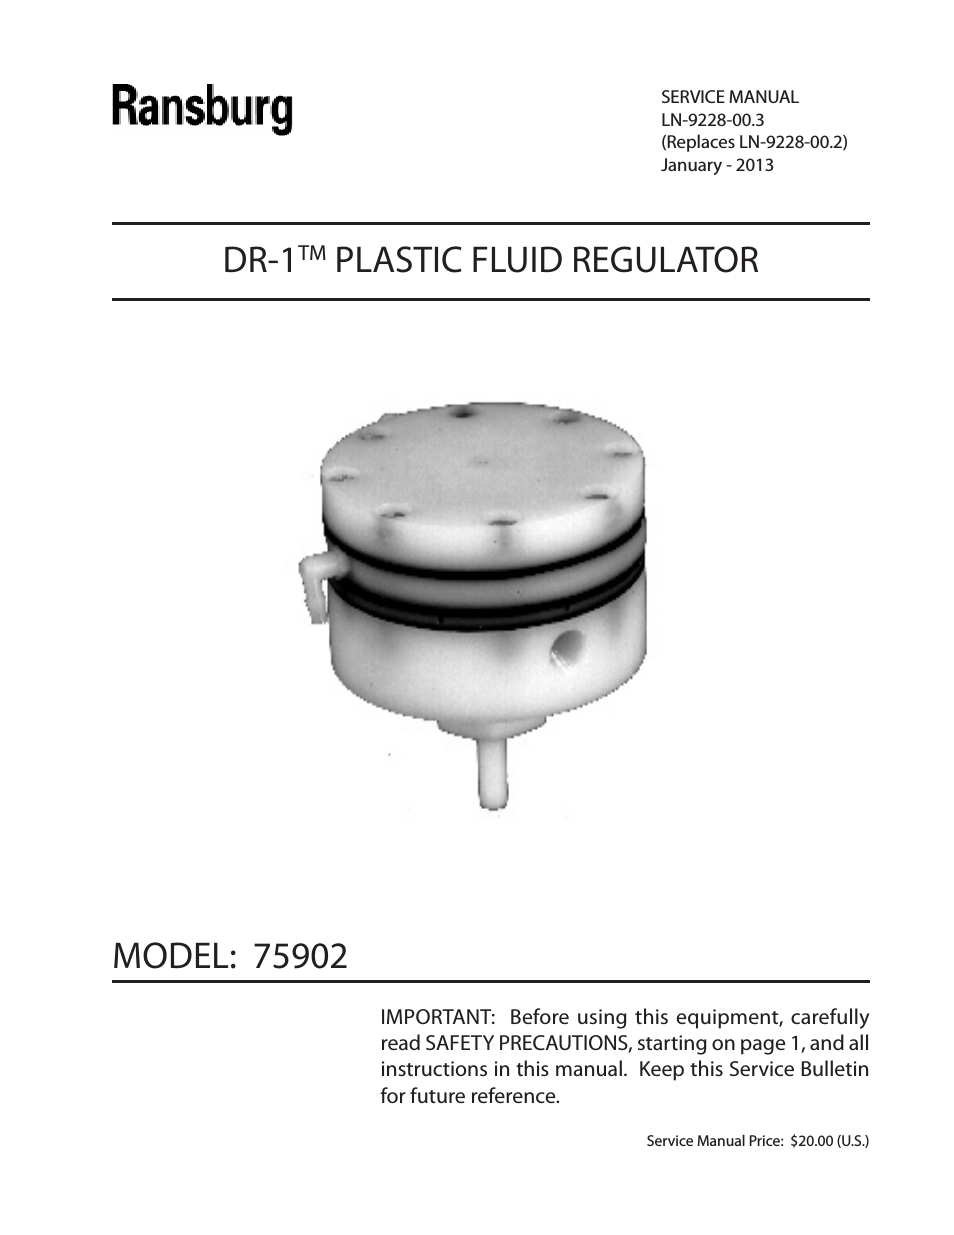 DR-1 Plastic Fluid Regulator 75902